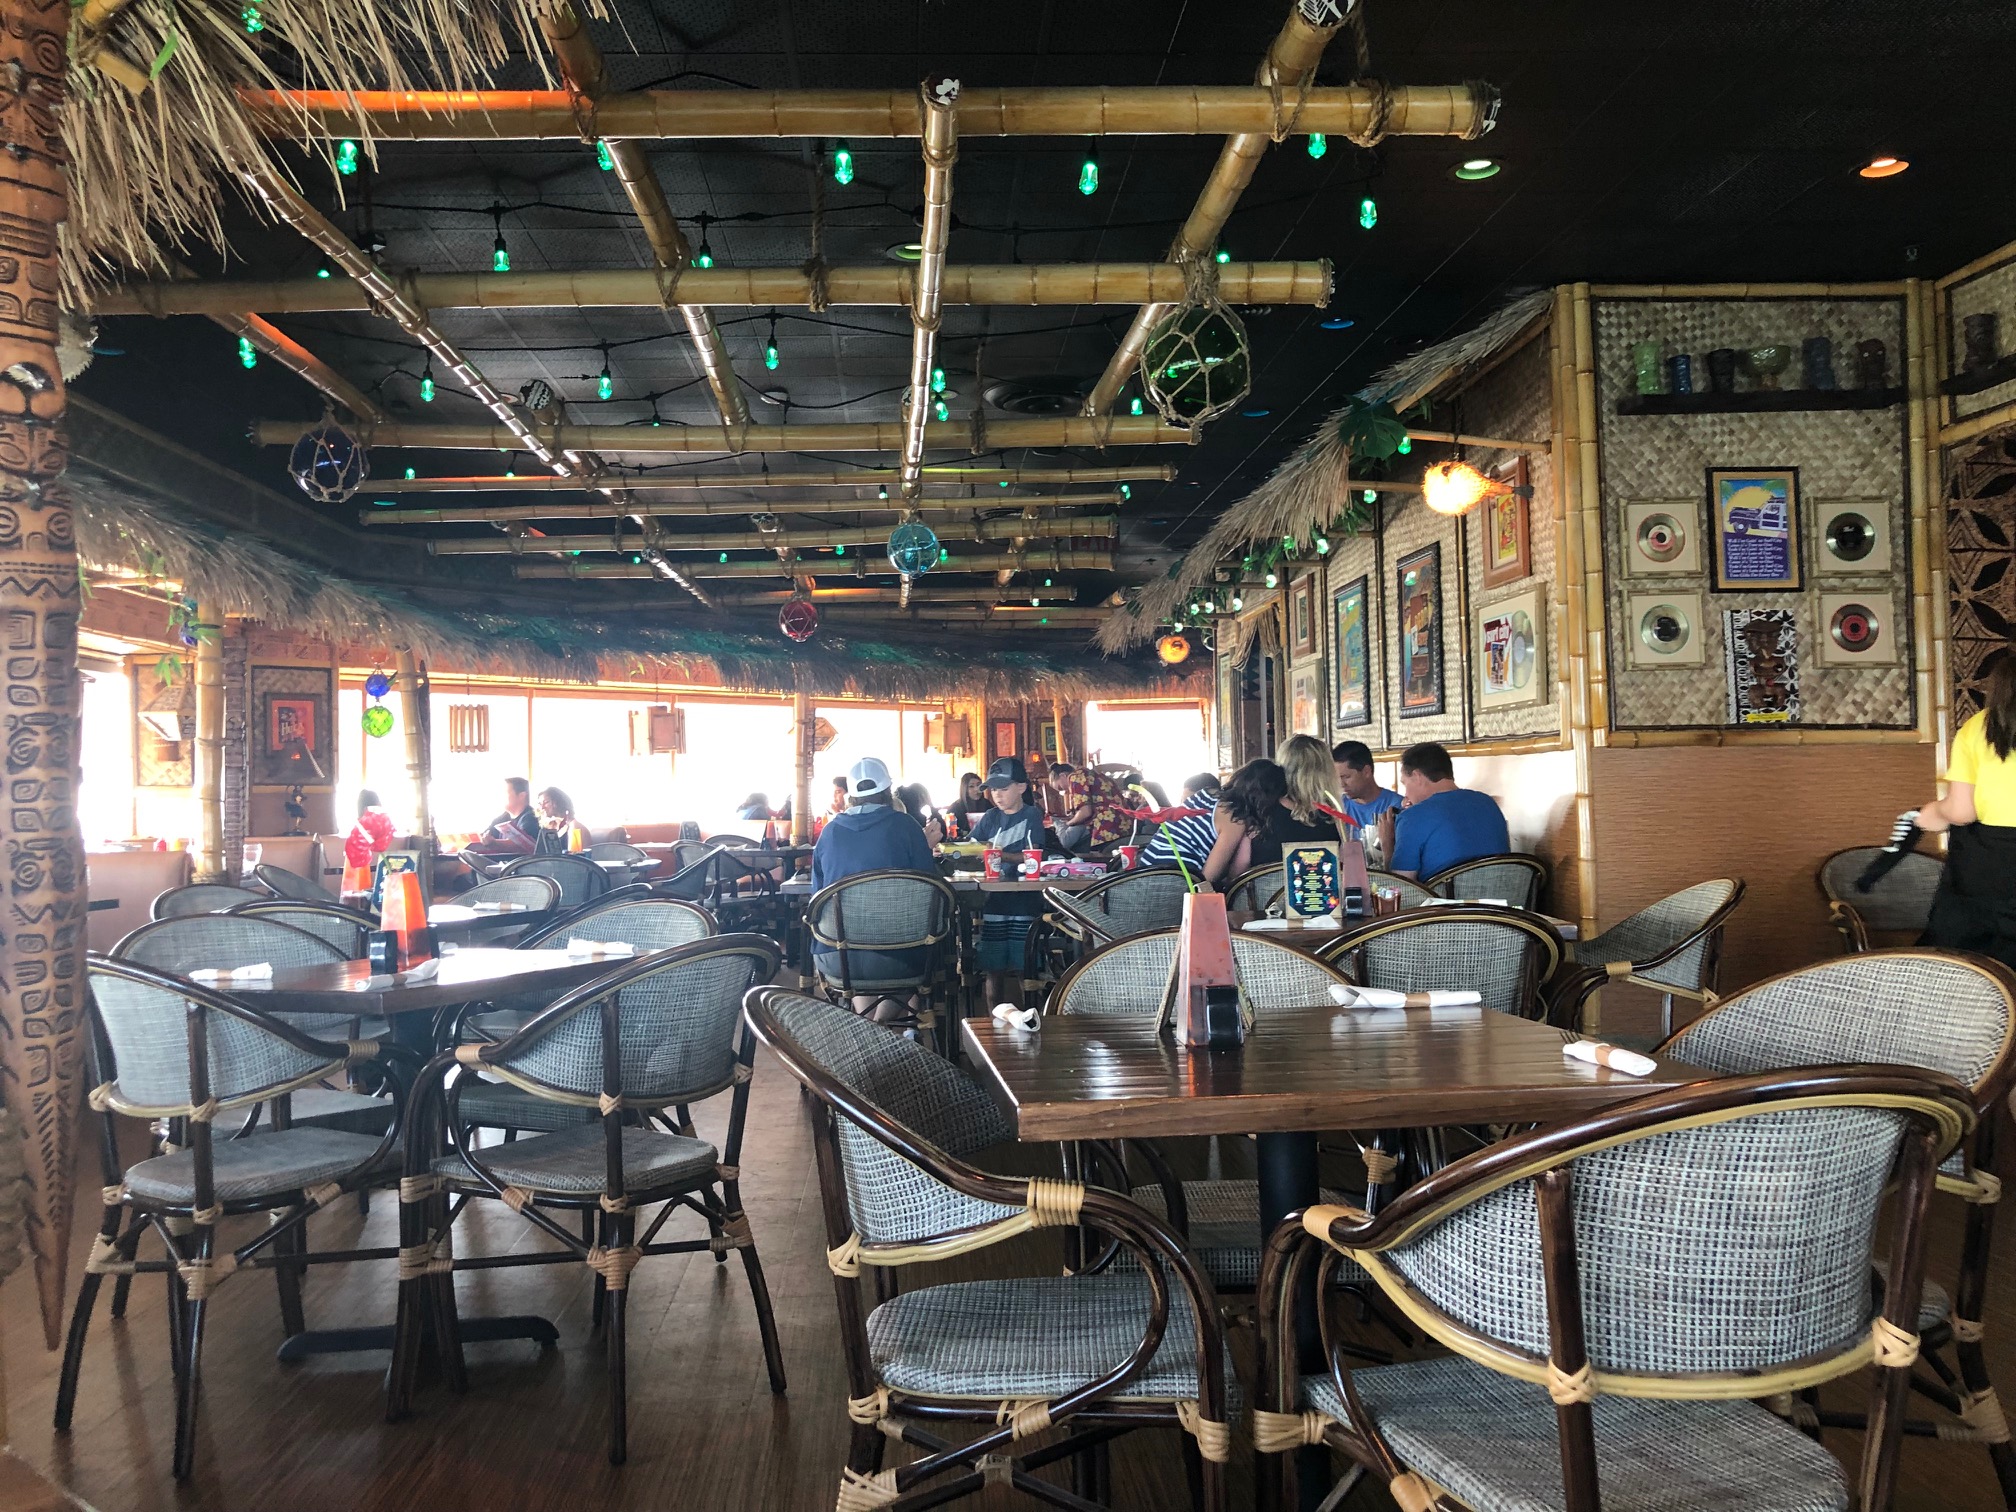 Ruby's Tiki Restaurant Re-Opens